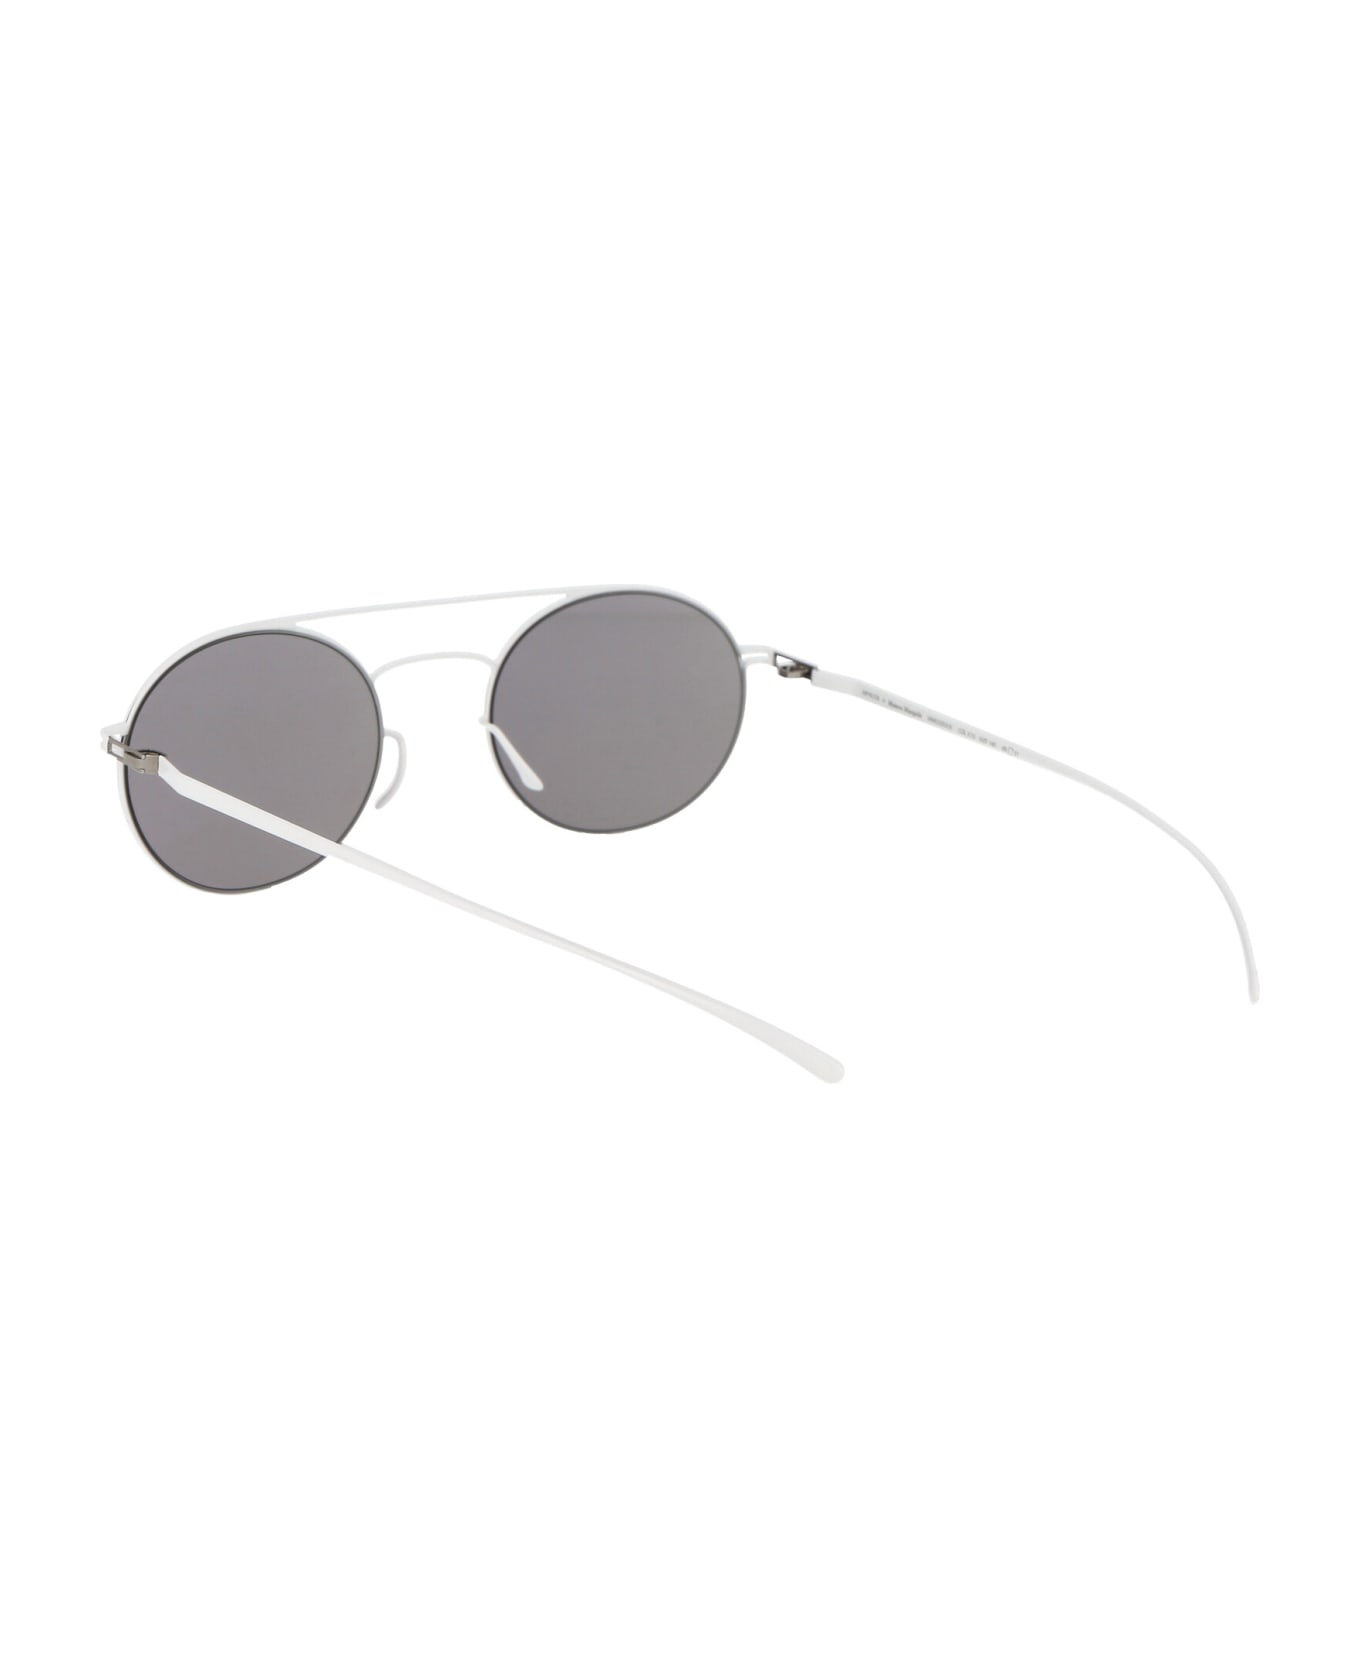 Mykita Mmesse019 Sunglasses - 333 E13 White Warm Grey Flash